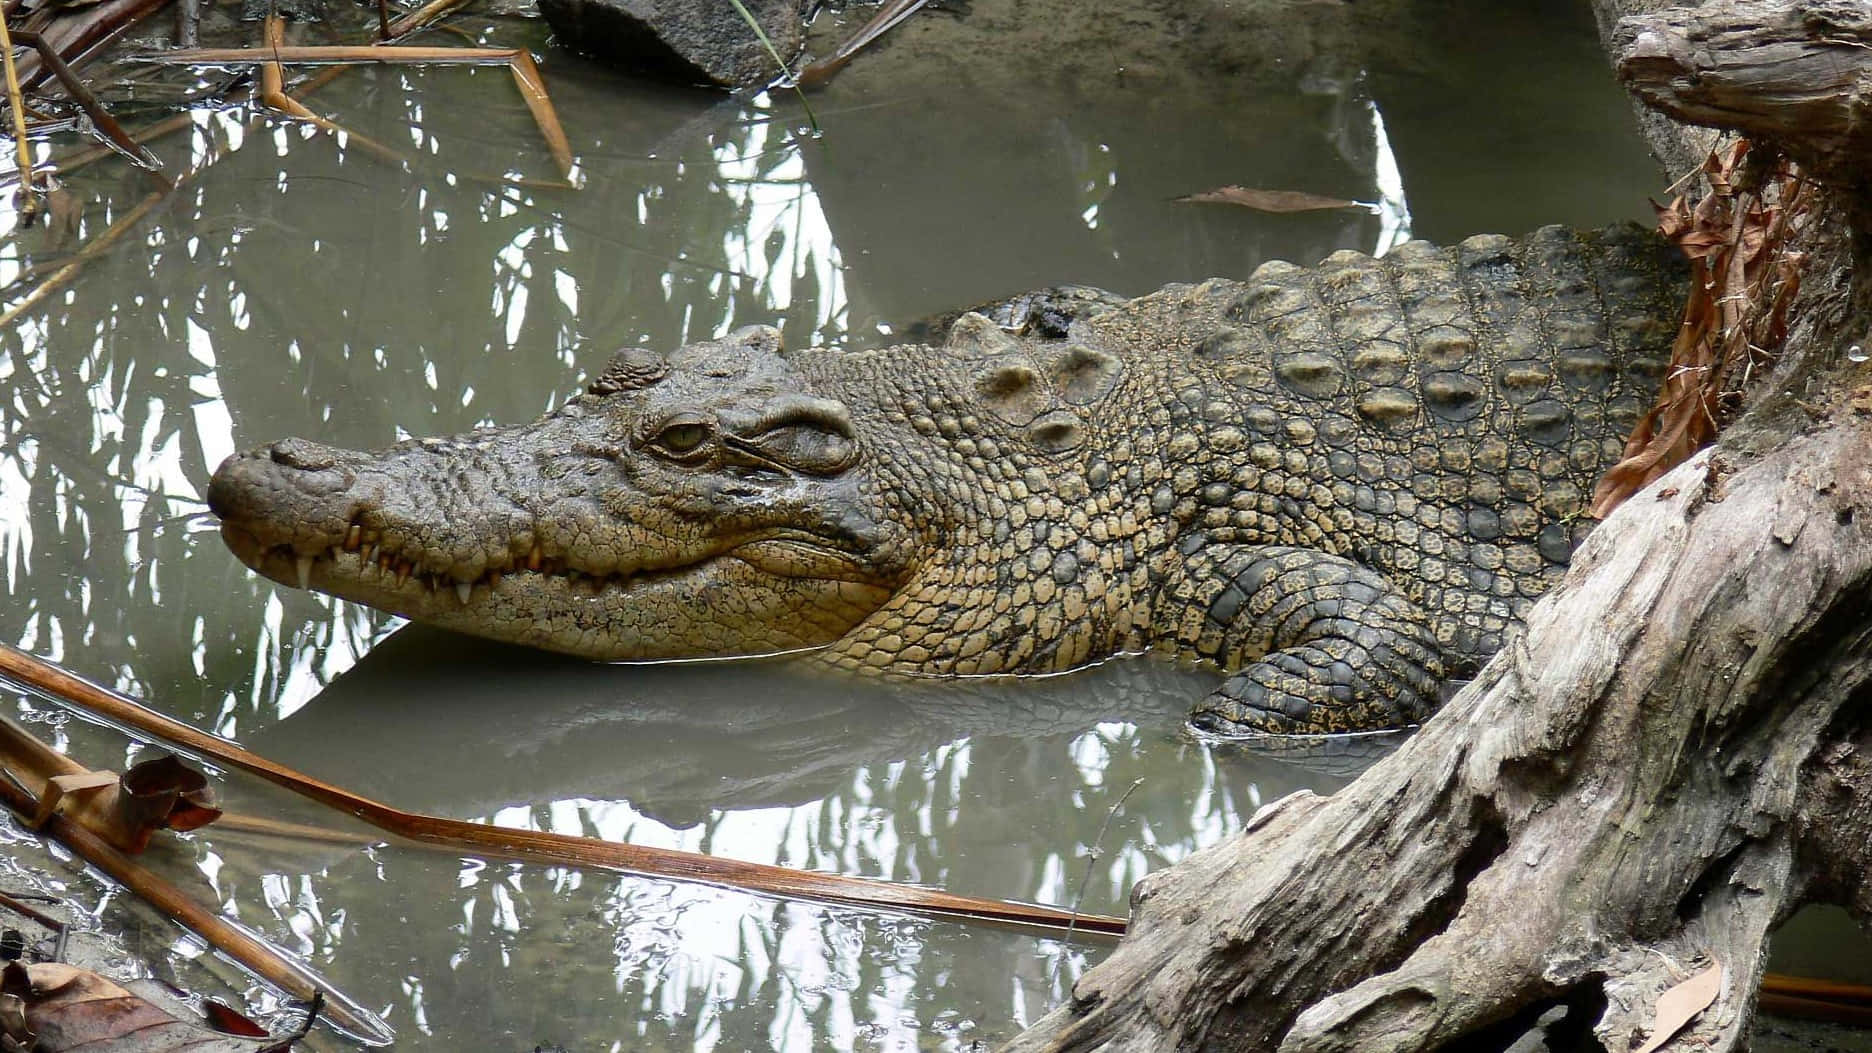 An Alligator resting in its natural habitat